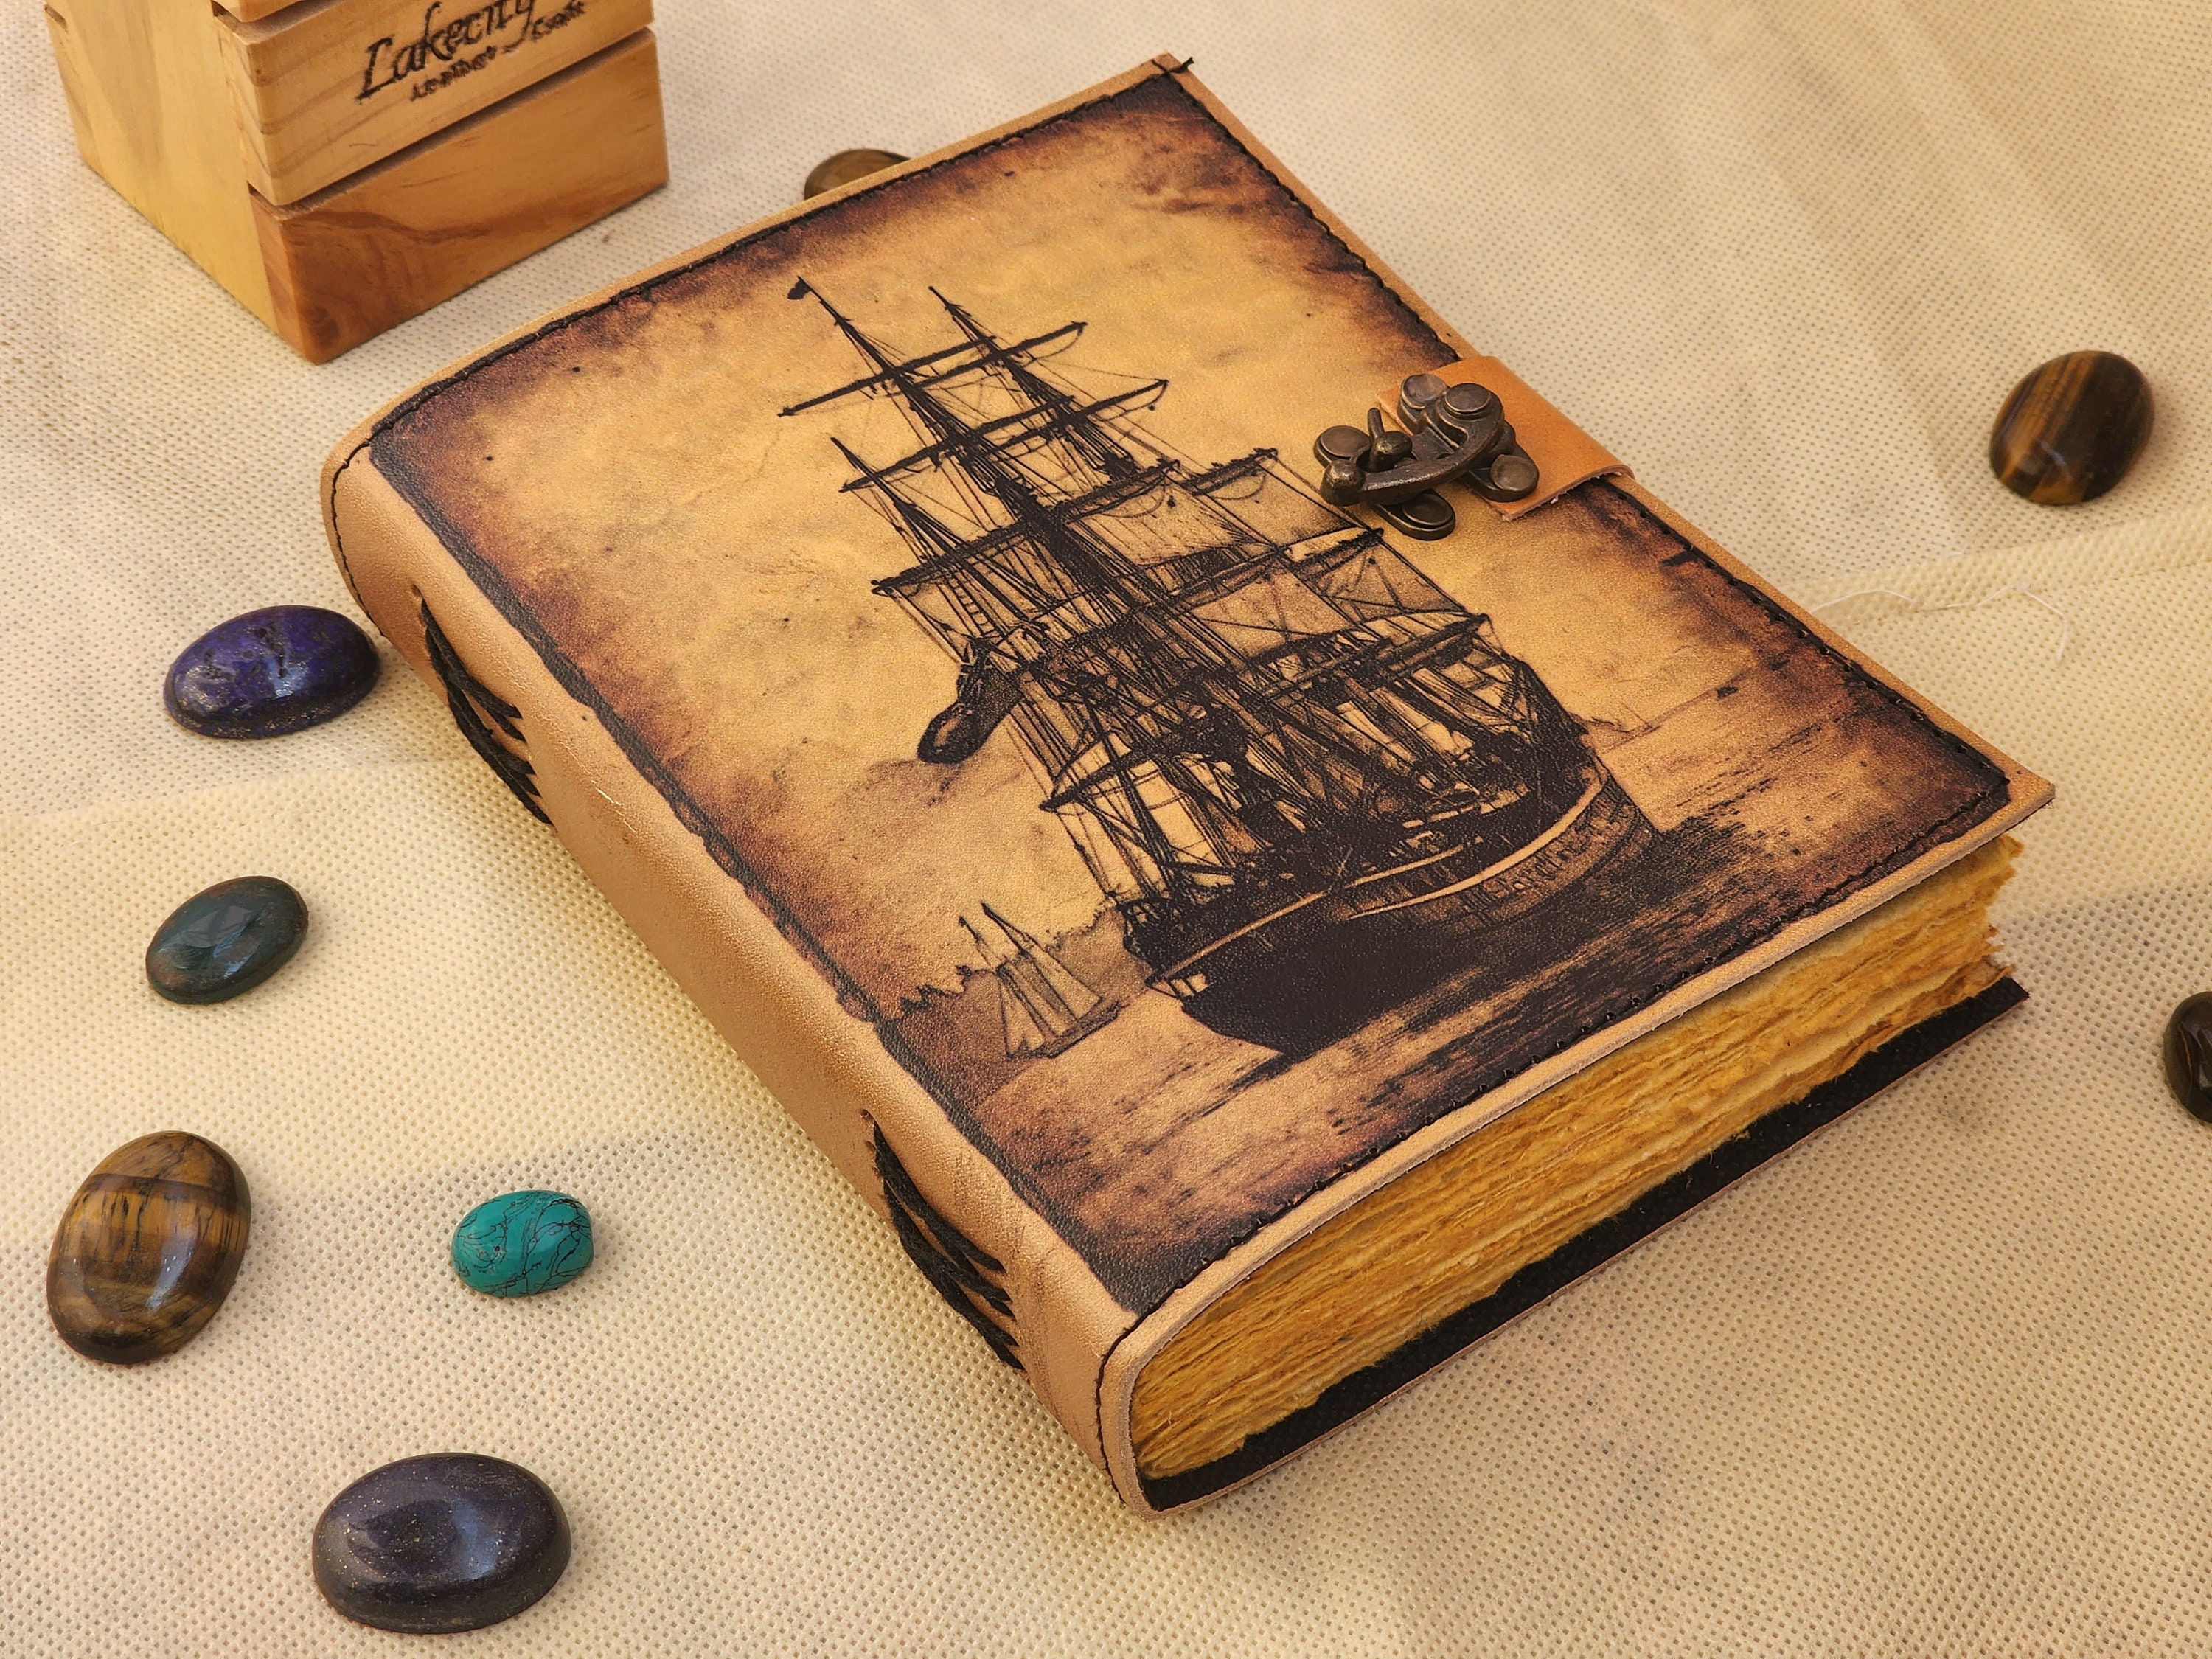 Sailing ship journal handmade deckle edge old paper grimoire sketchbook  journal